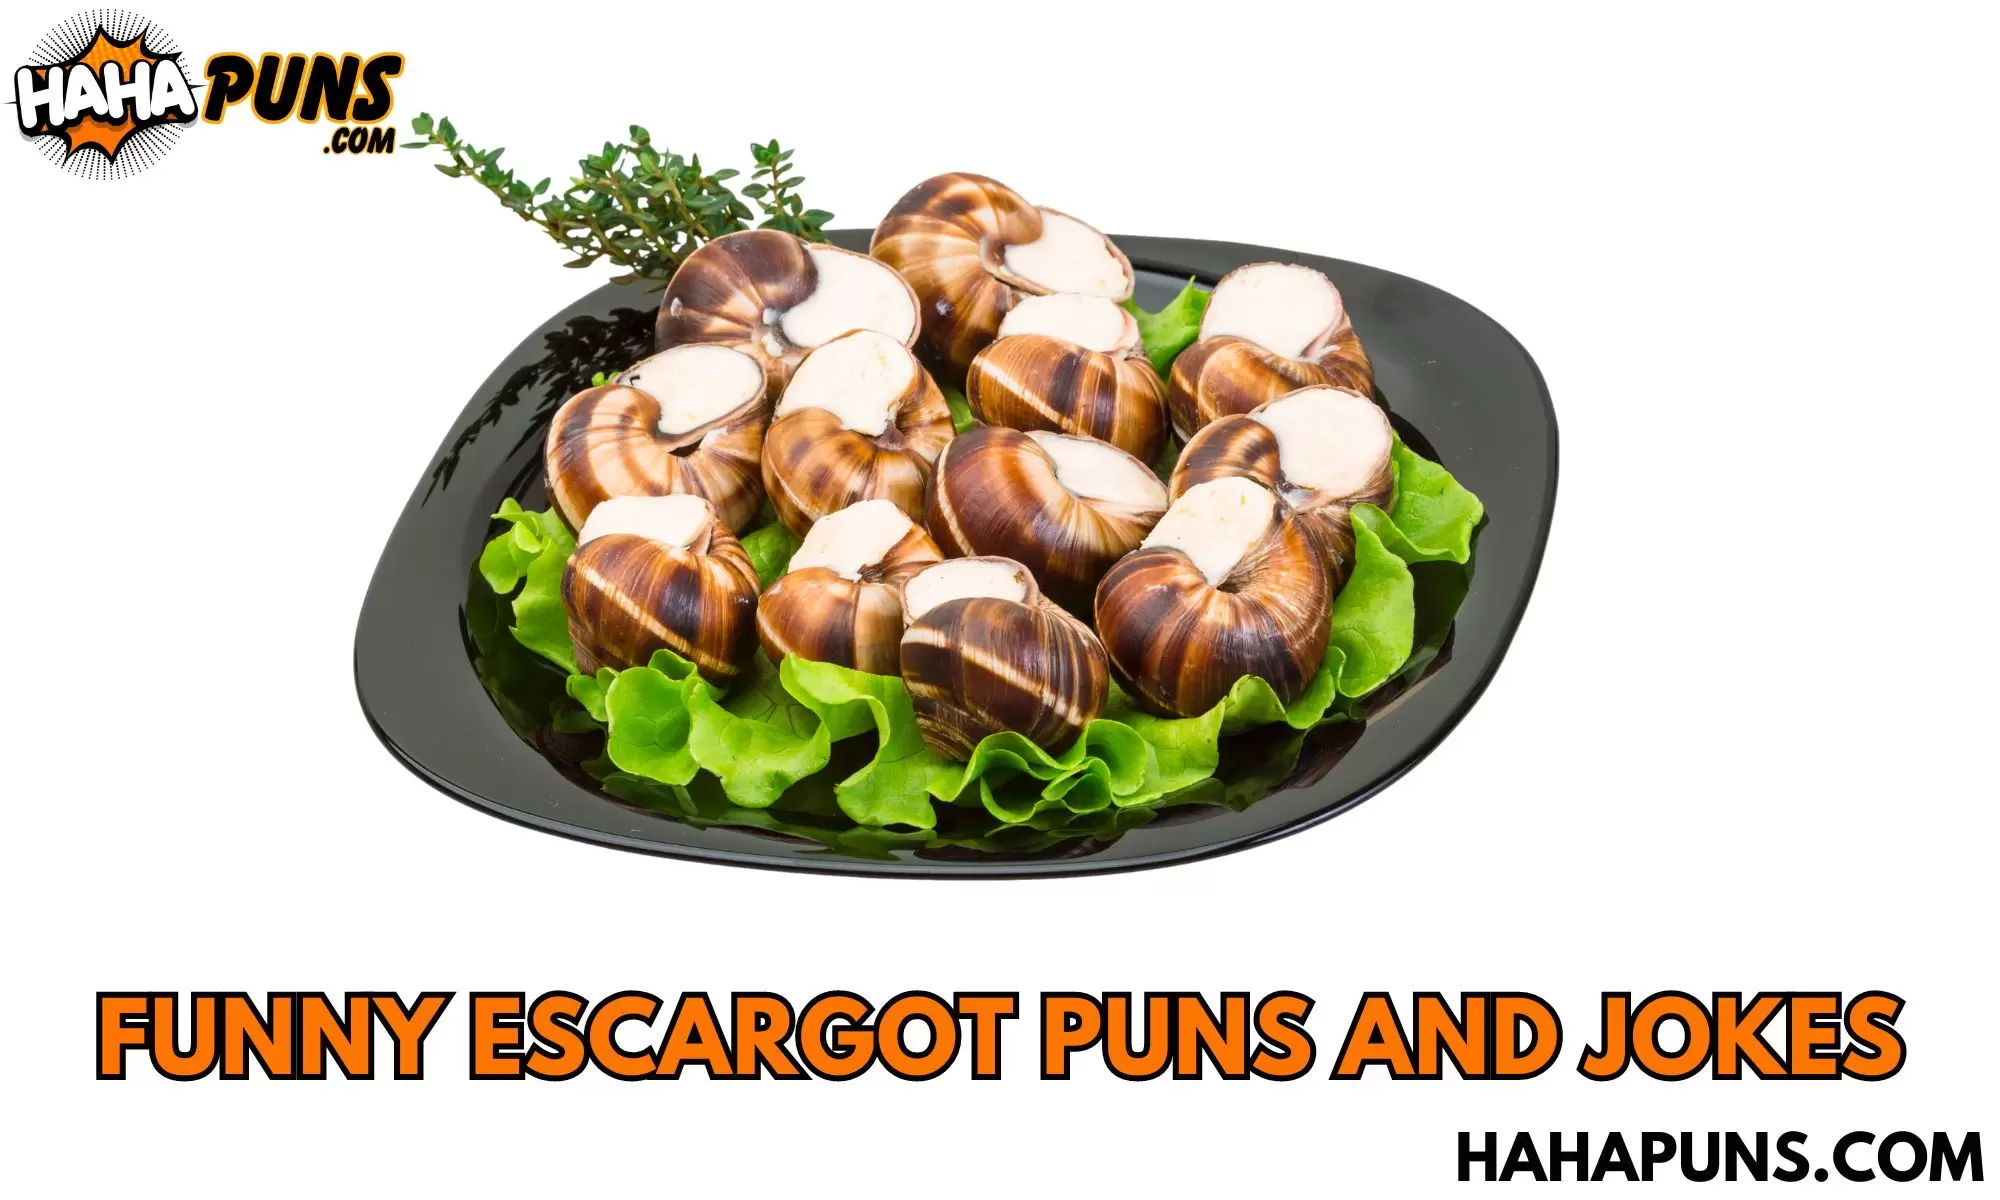 Funny Escargot Puns And Jokes